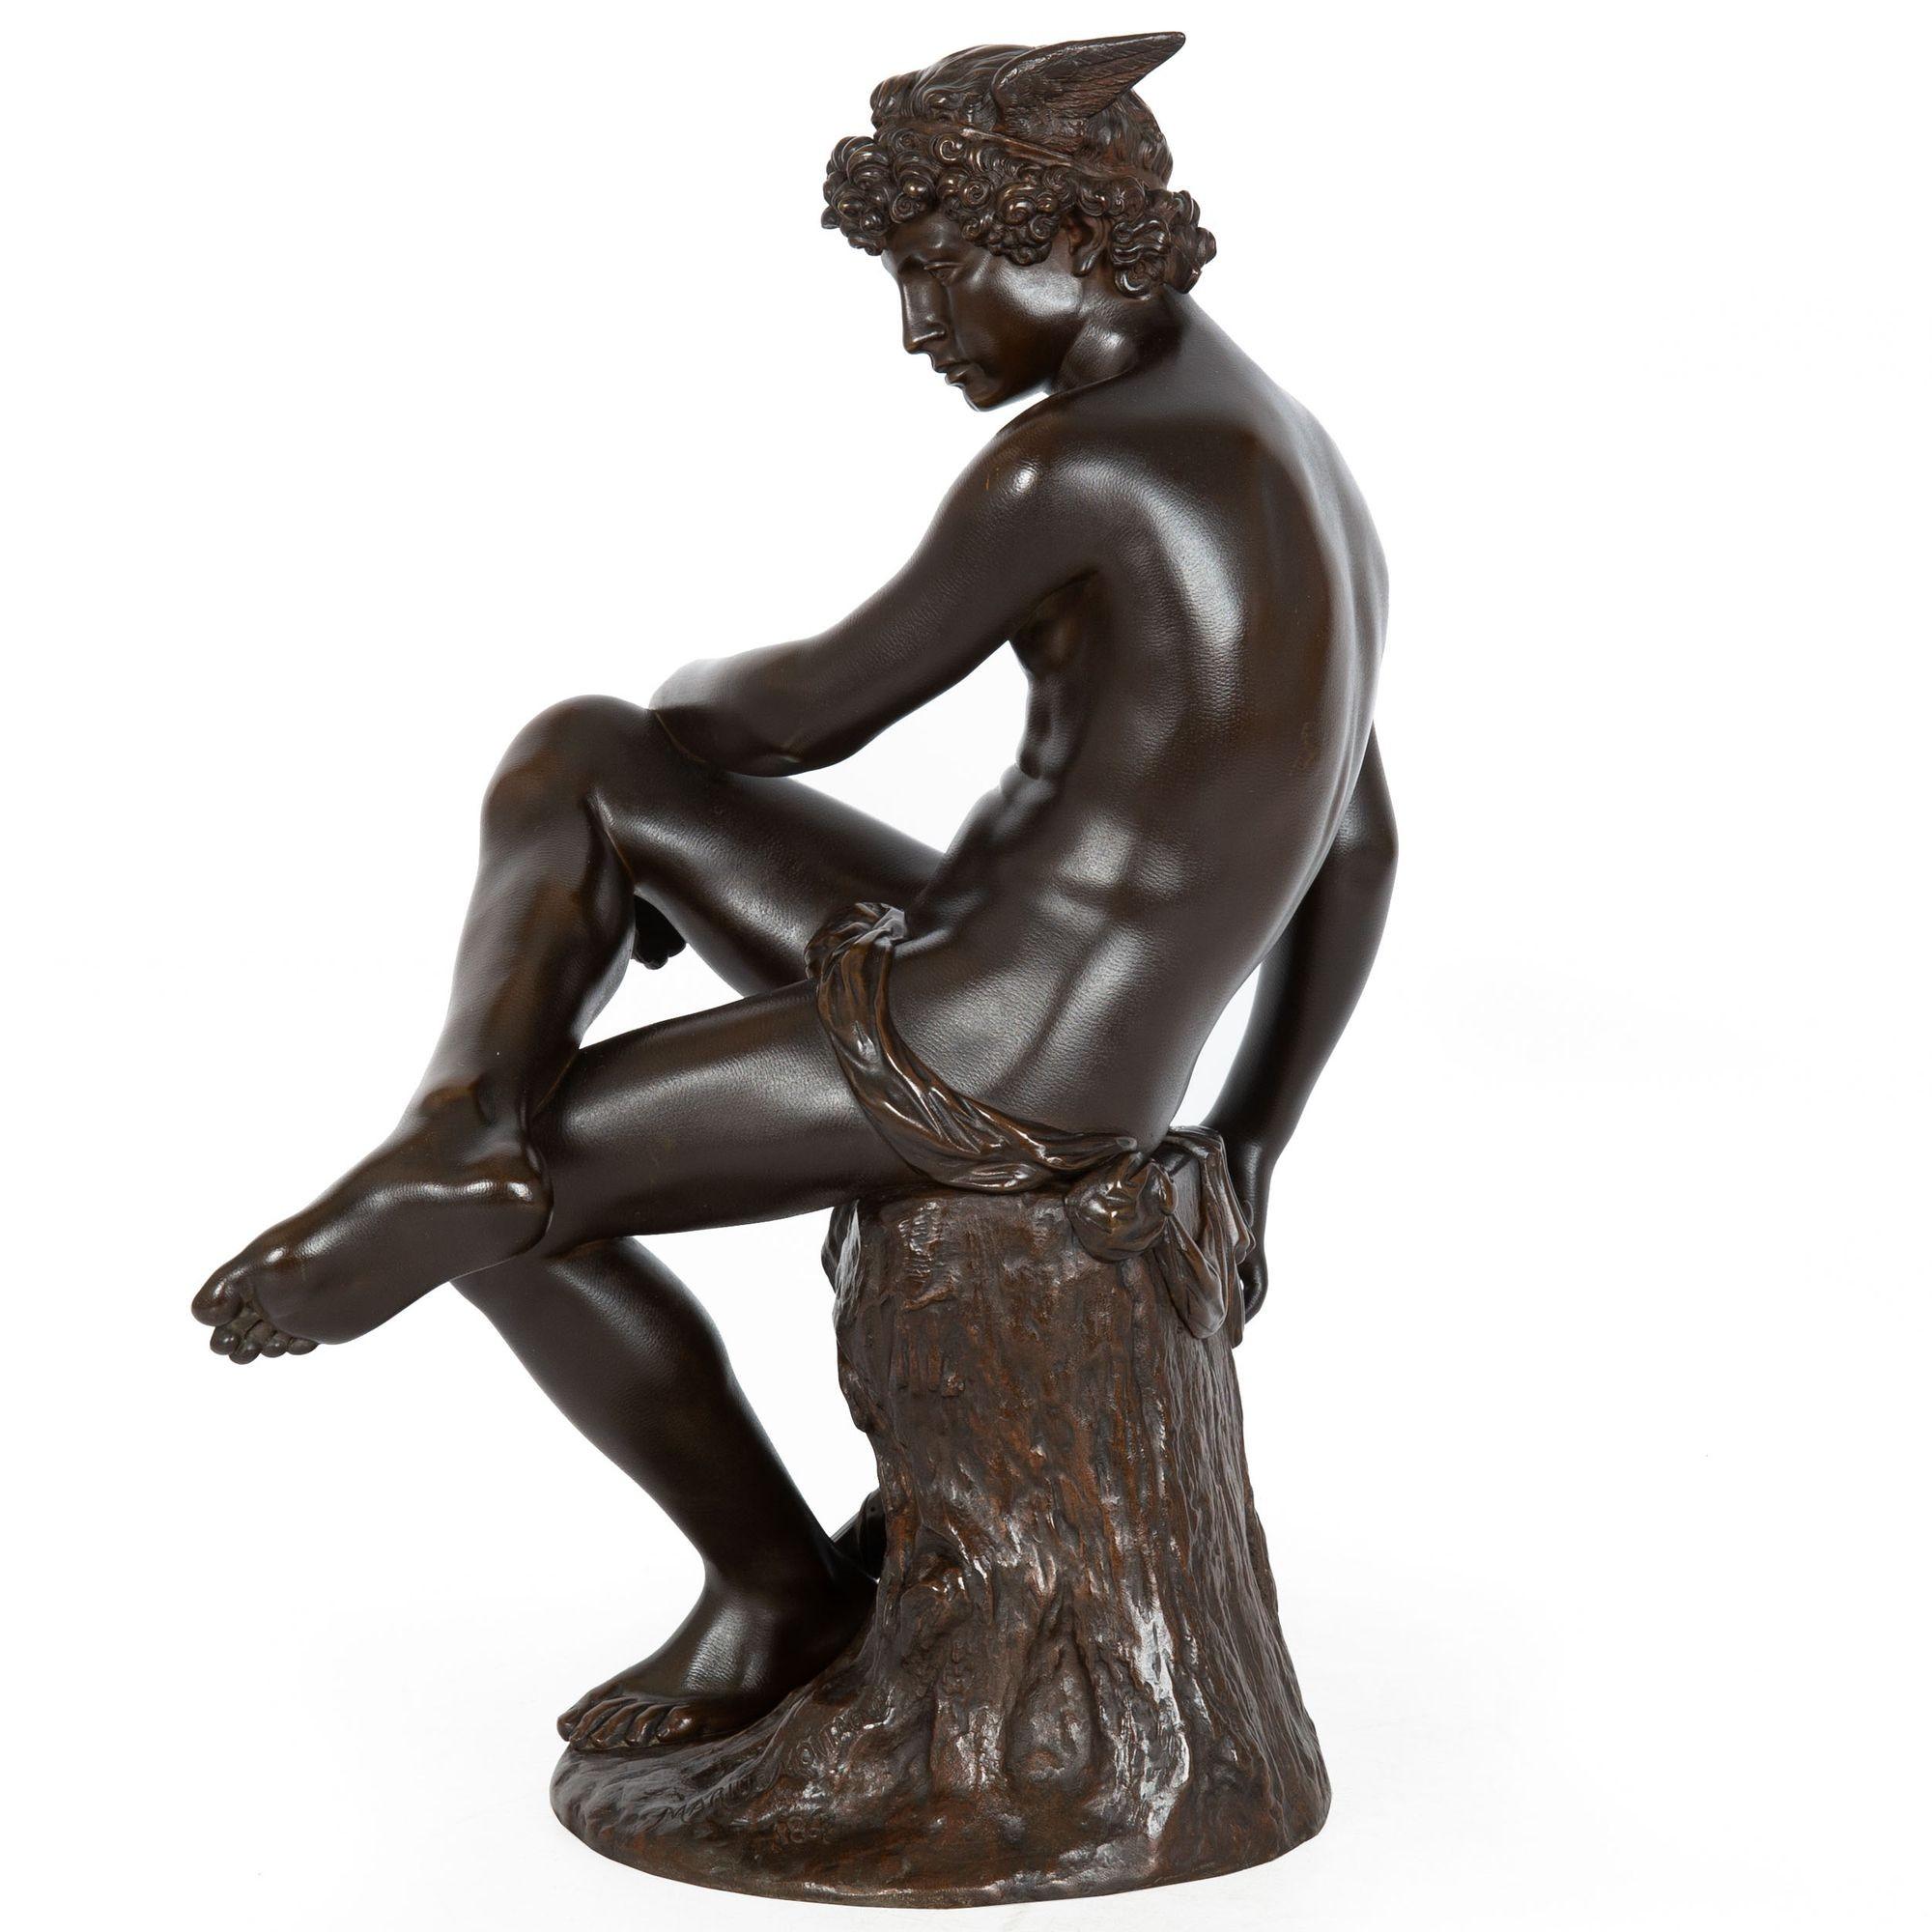 Romantic Rare French Antique Bronze Sculpture “Mercury” by Pierre Marius Montagne